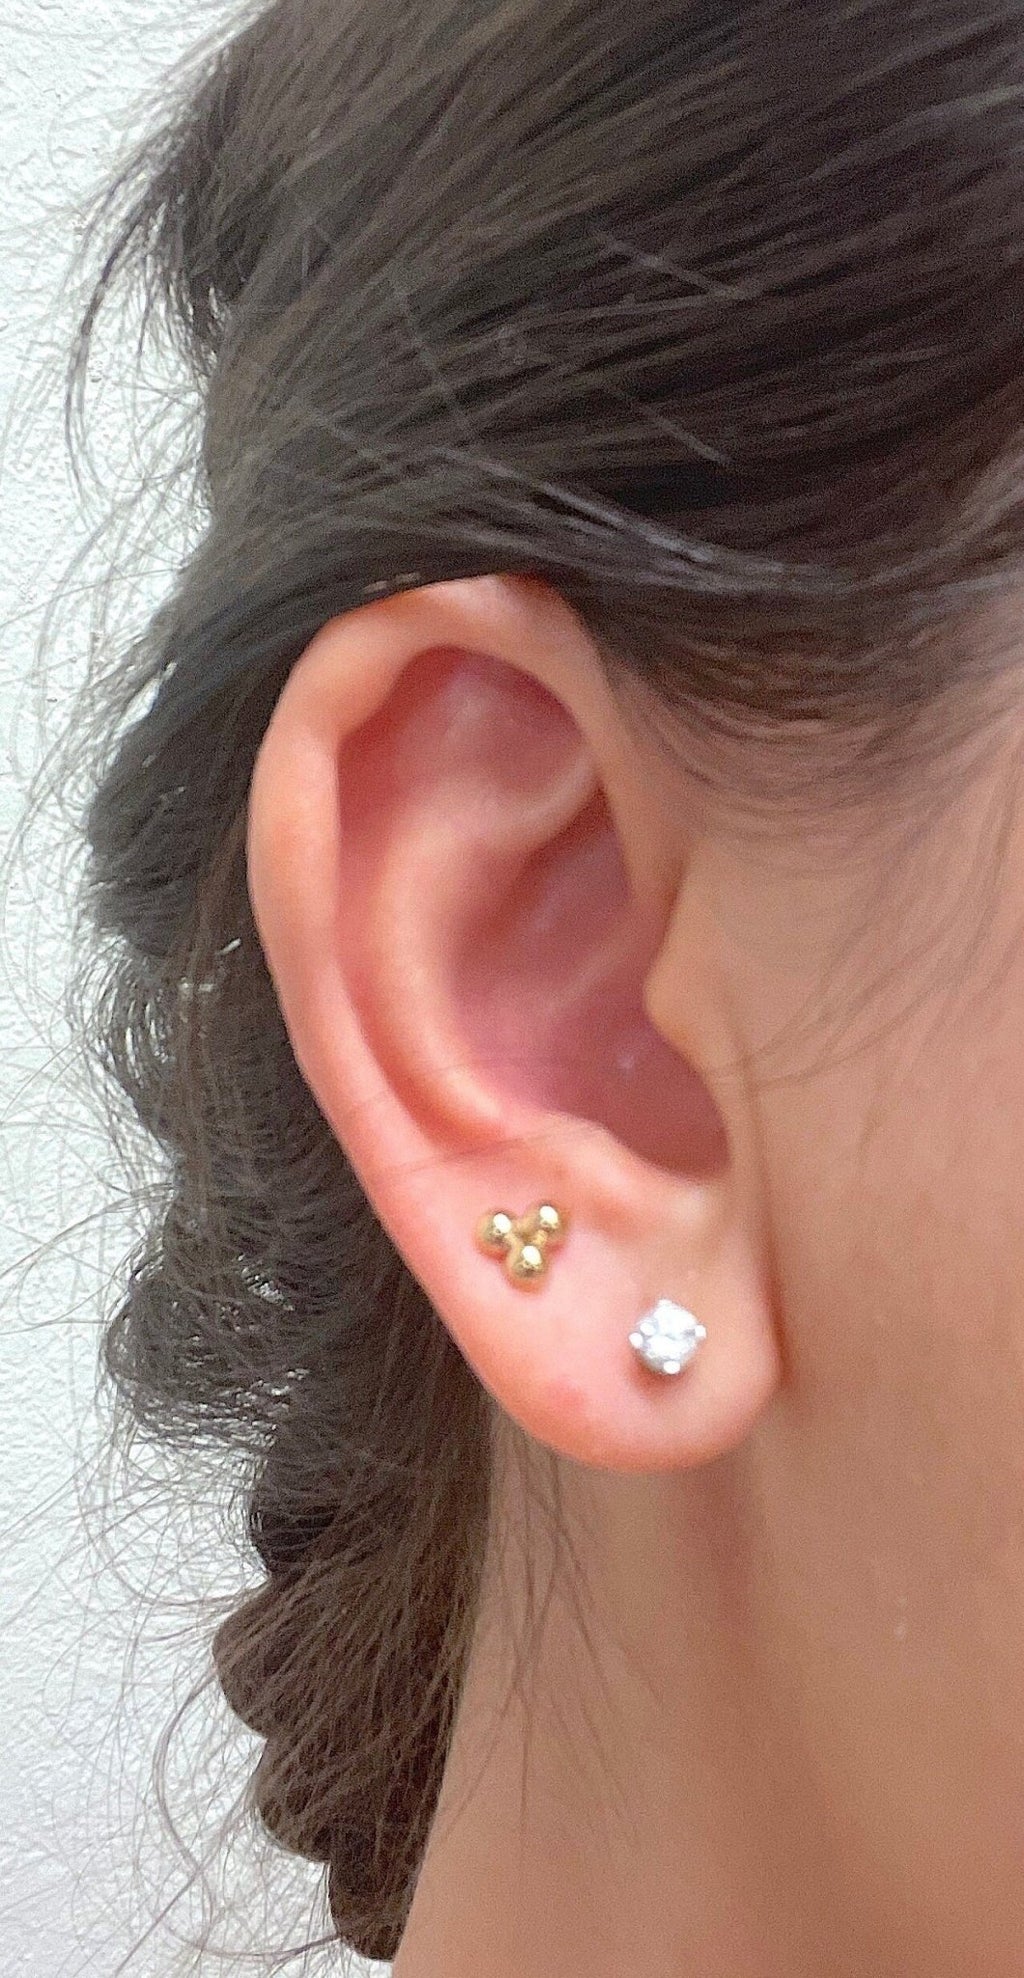 14K REAL Solid Gold Matte-Finish Heart Ear Cartilage Stud Earring Piercing  18G